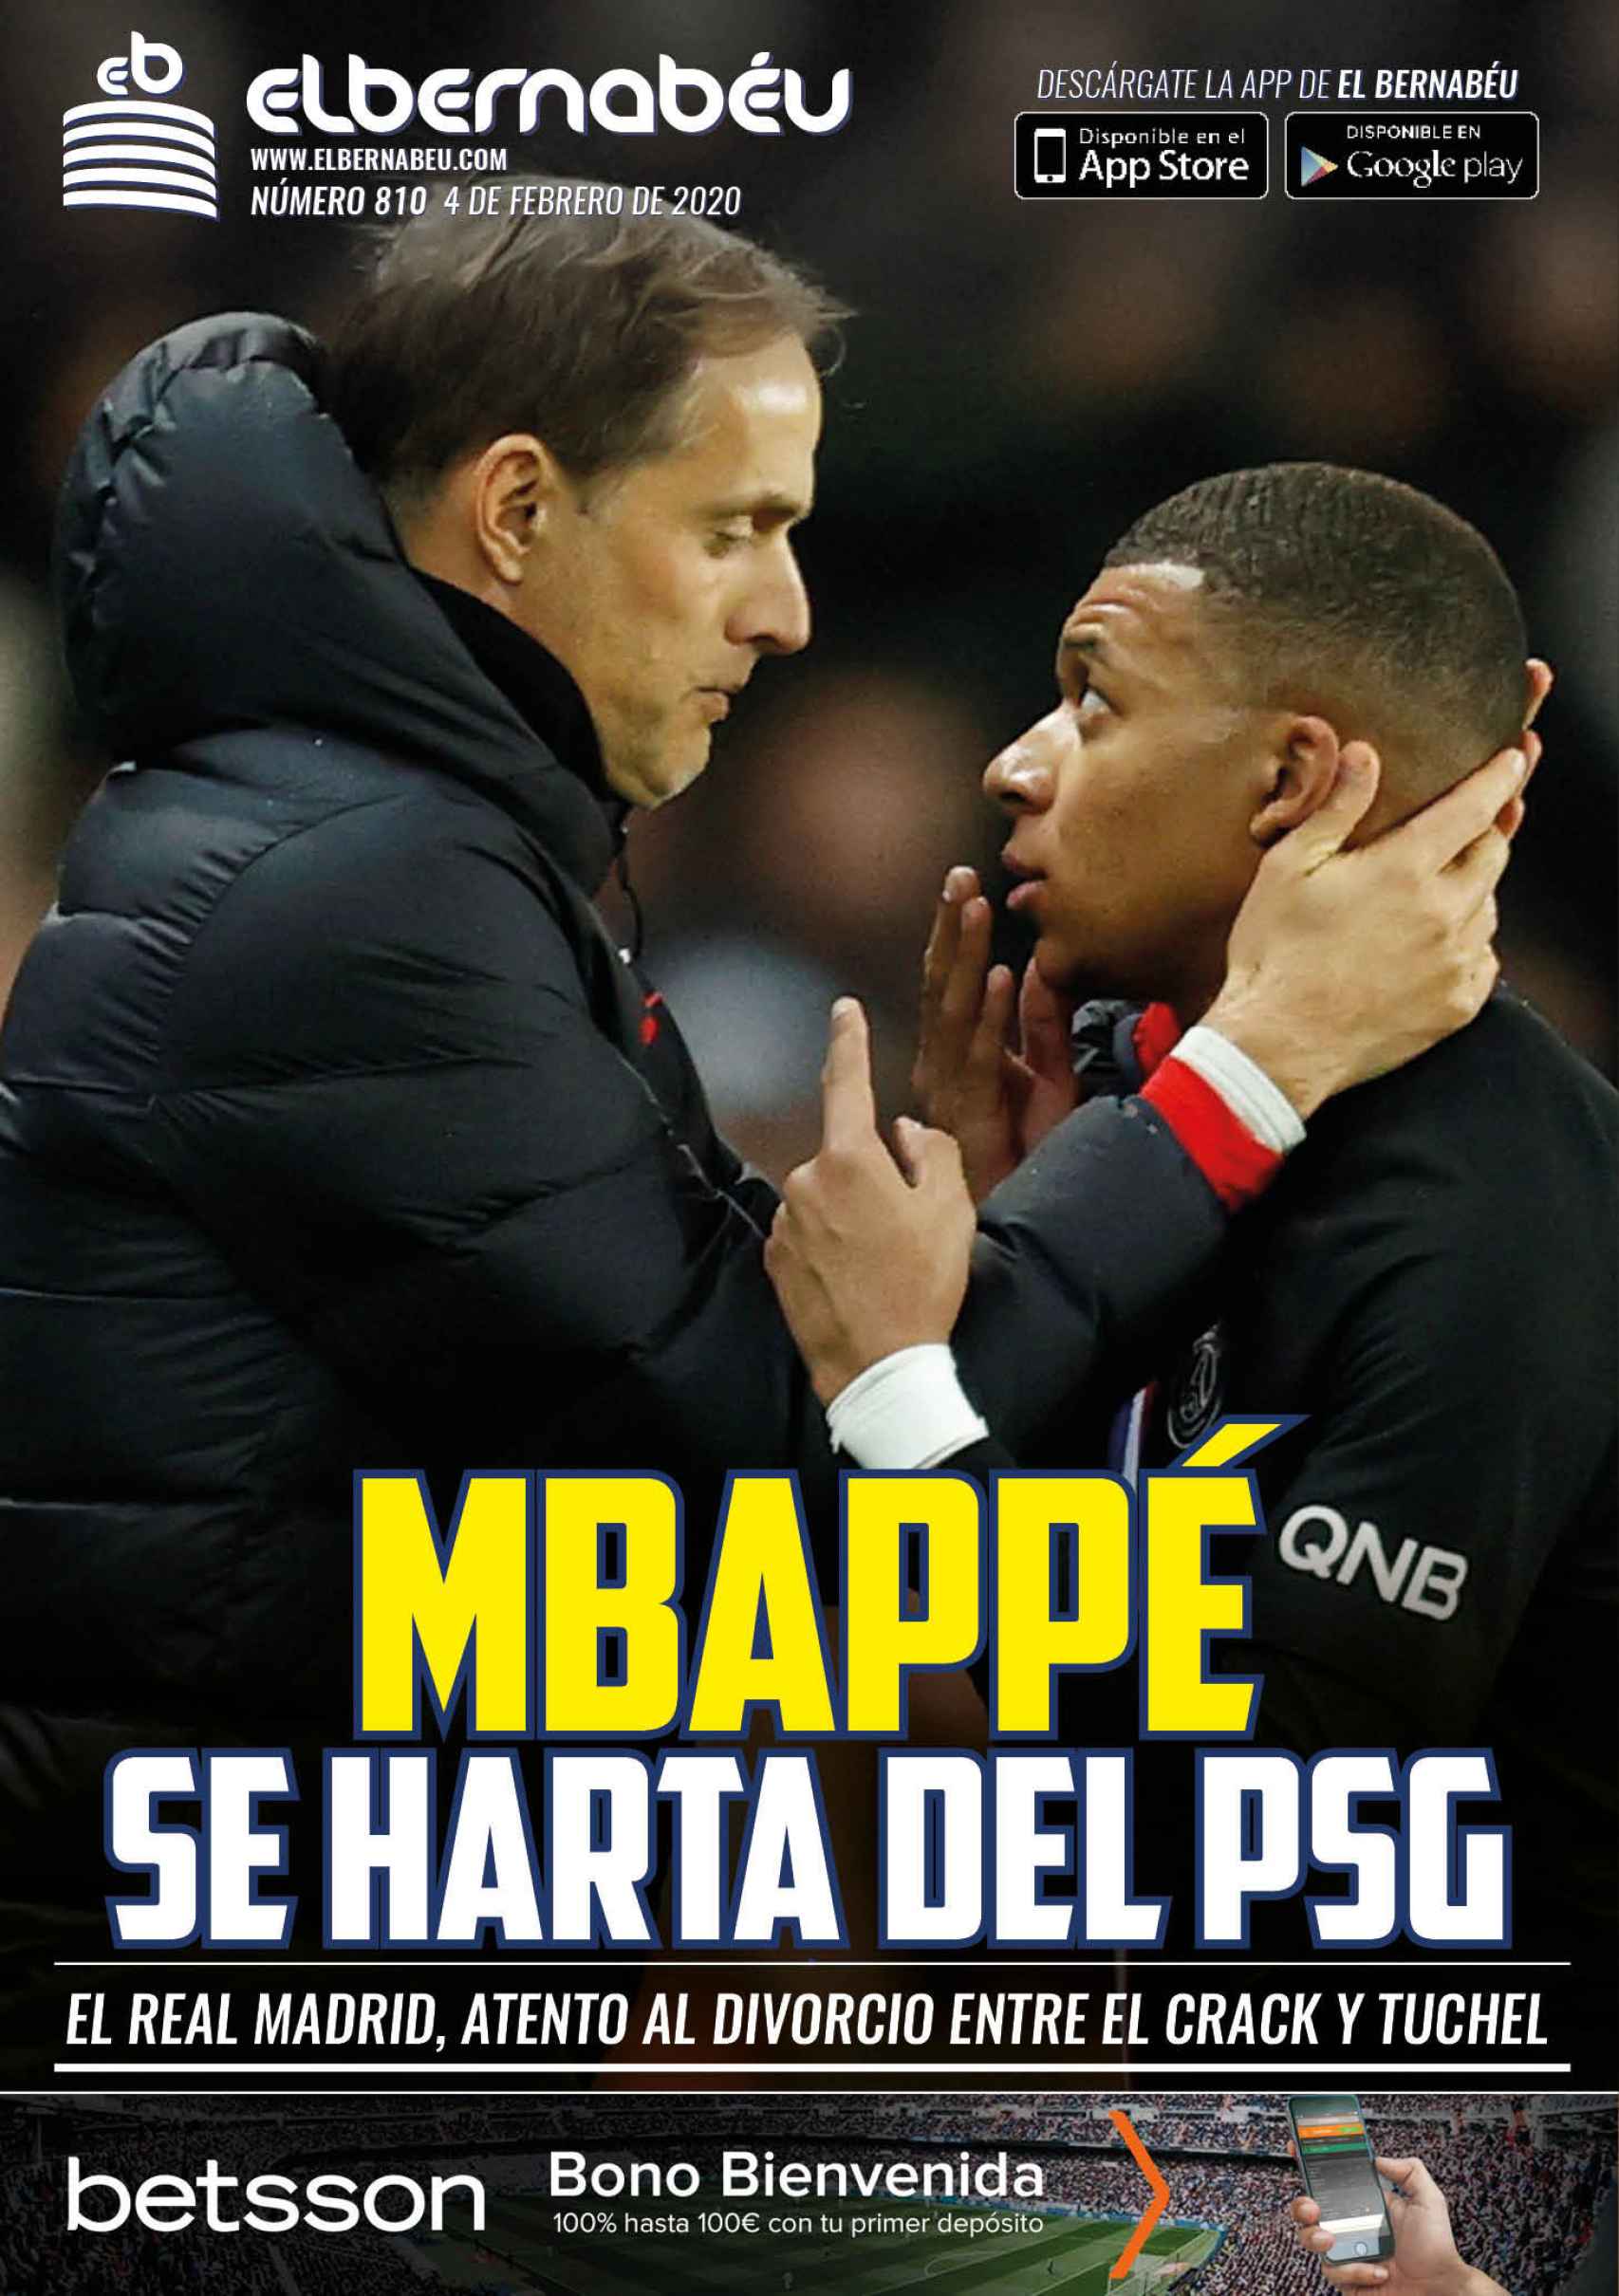 La portada de El Bernabéu (04/02/2020)